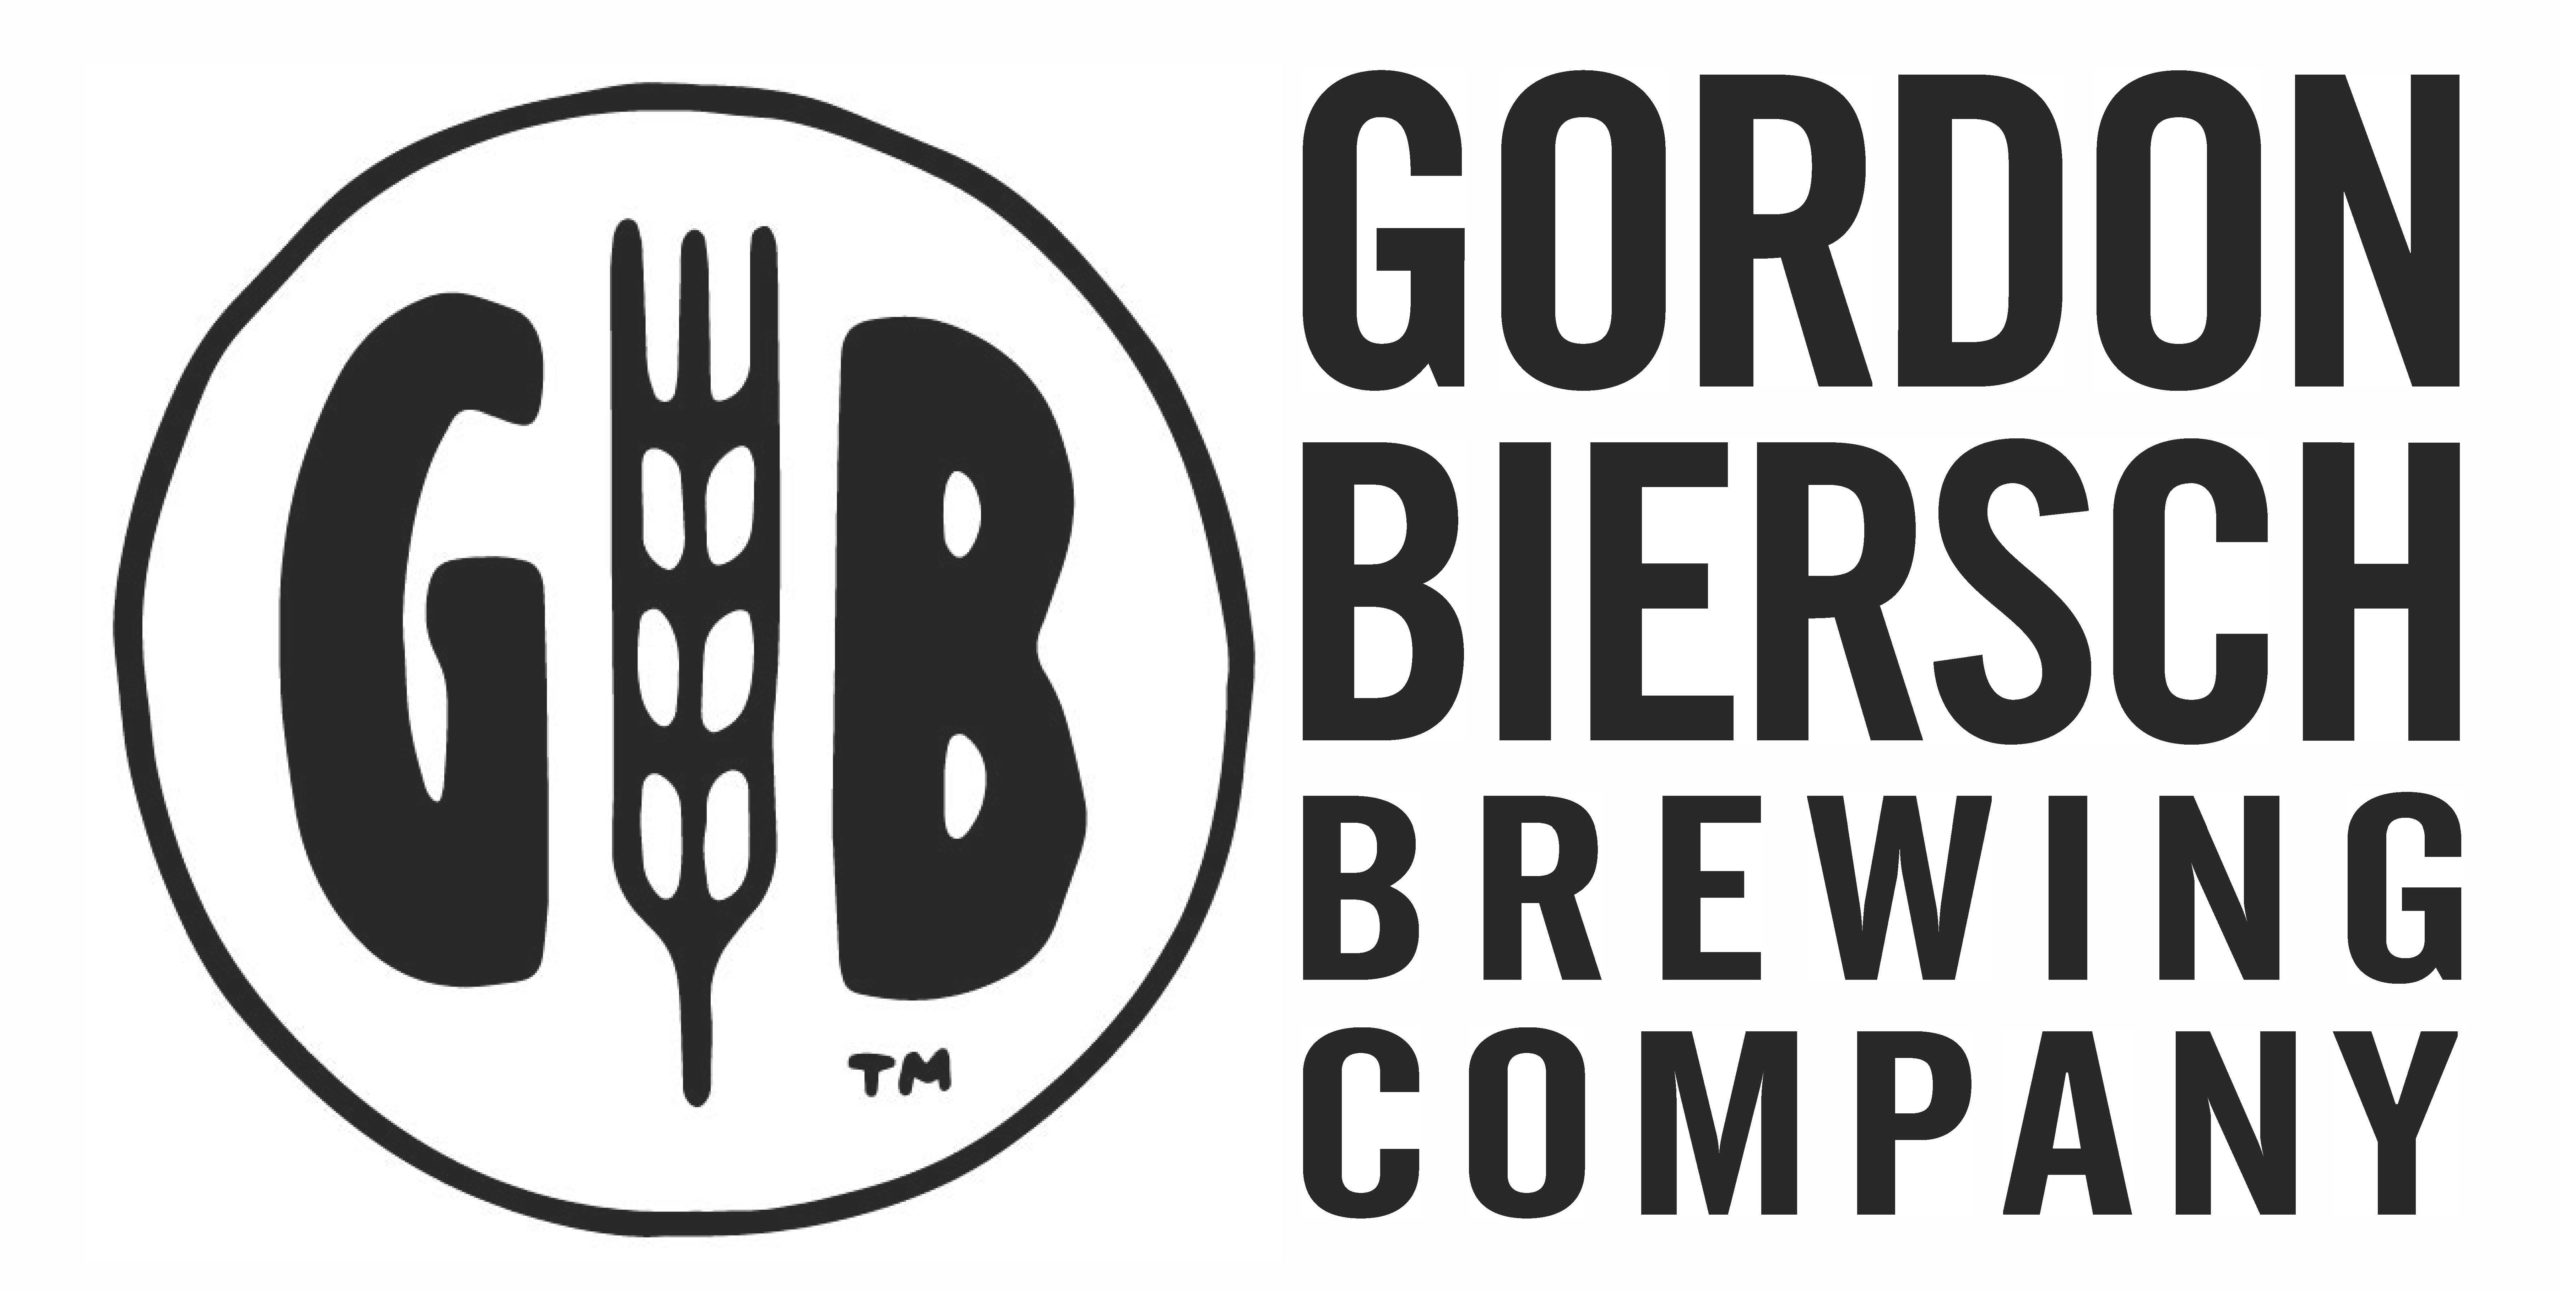 GB Emblem by GBBC Rebrand 1-color_Blk on White